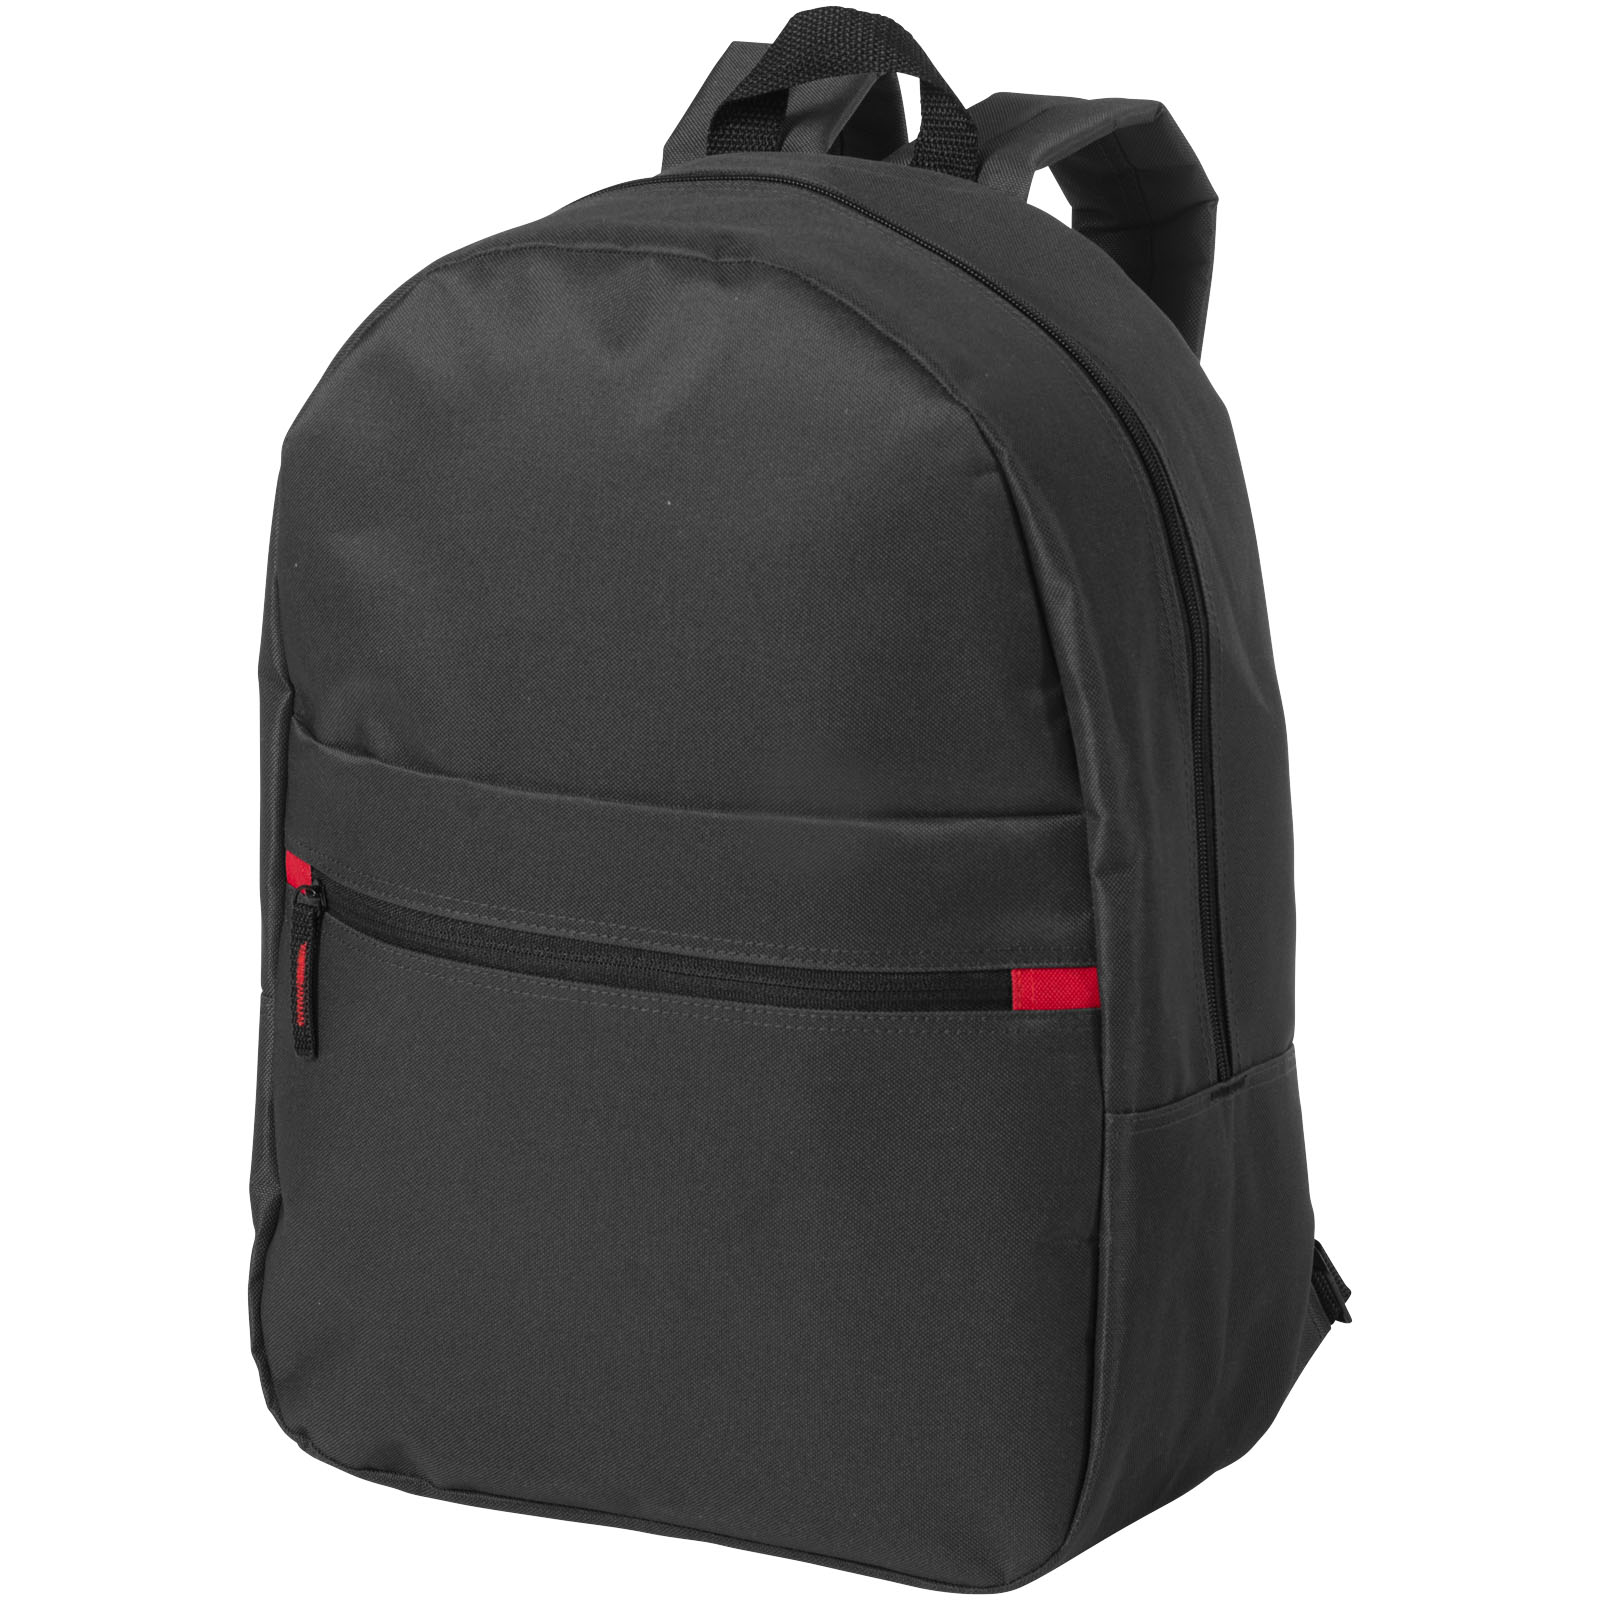 Advertising Backpacks - Vancouver backpack 23L